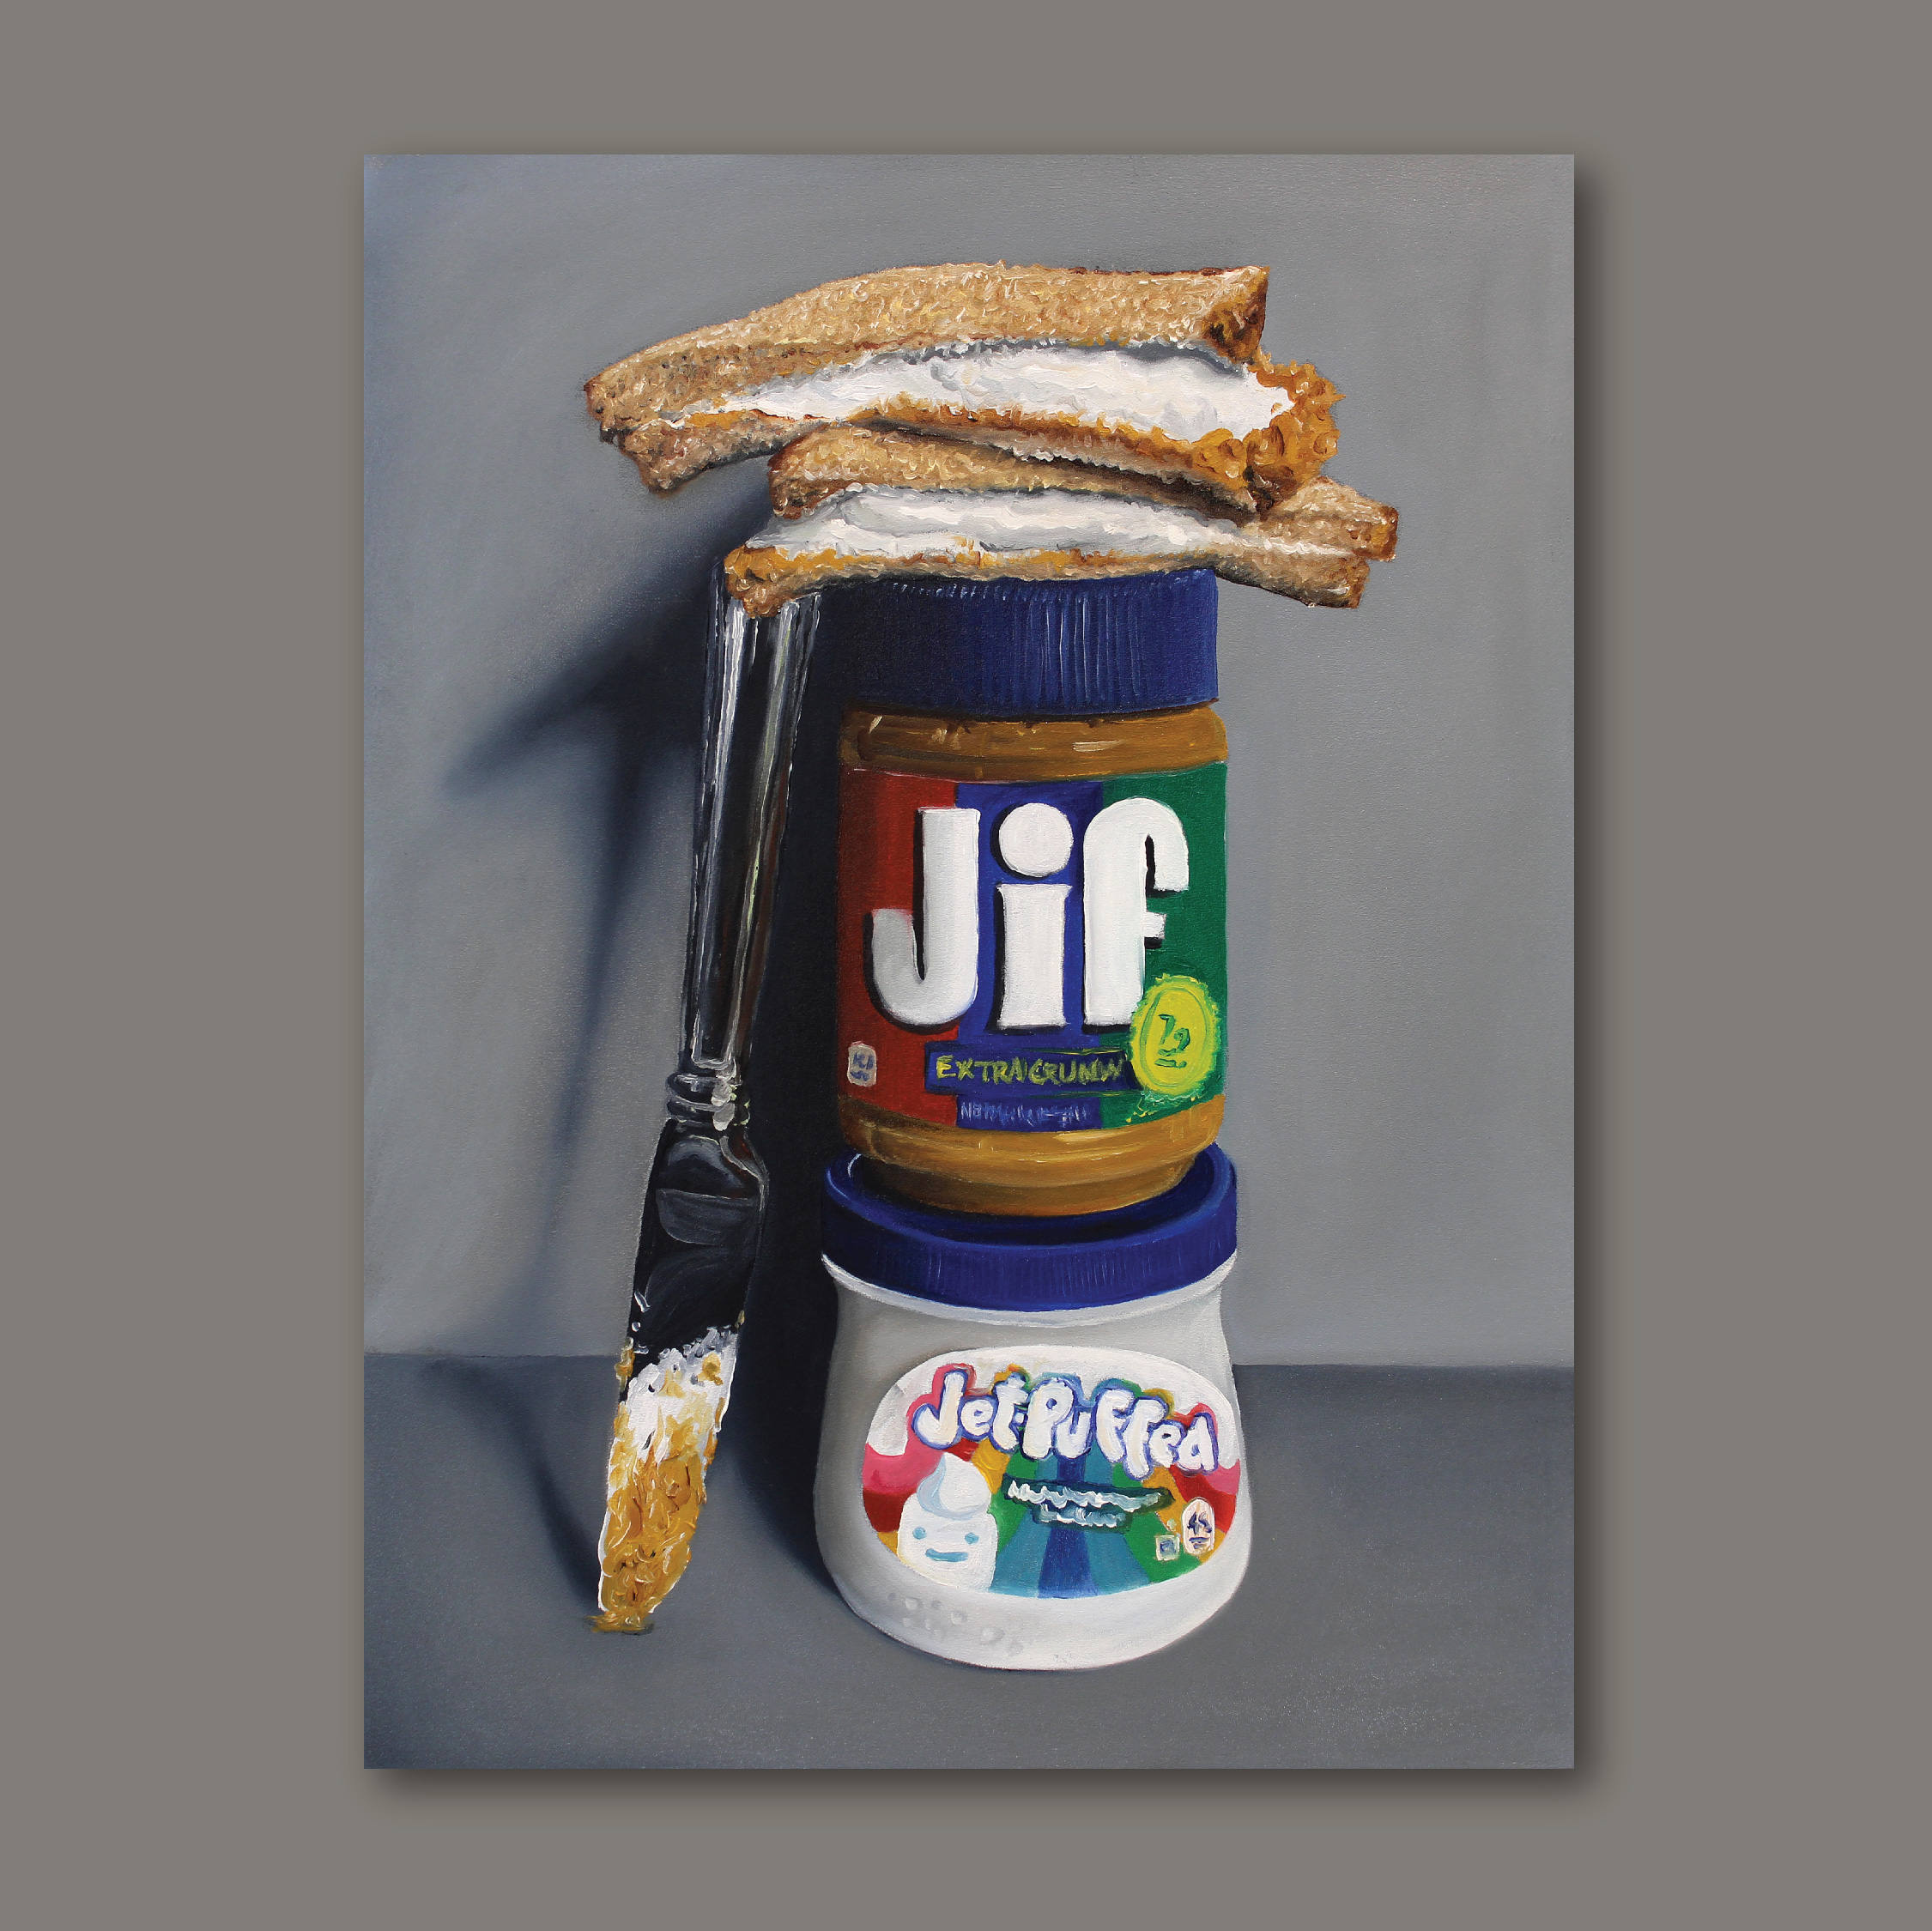 "Marshmallow Creme & PB Sandwich" 12x16 Original Oil Painting by Abra Johnson